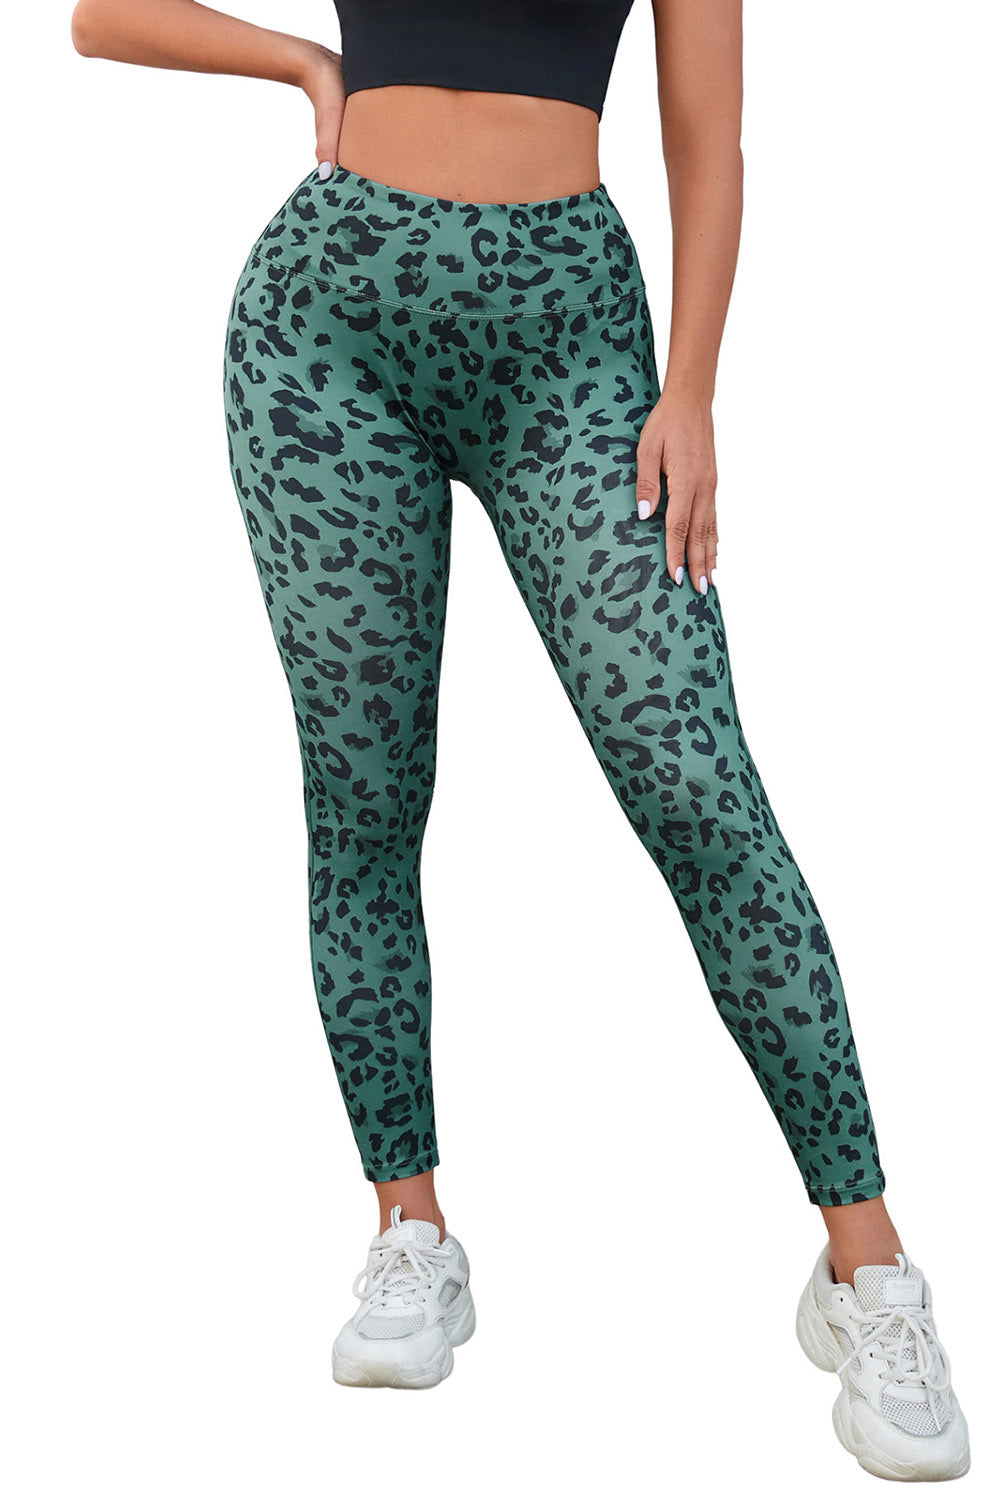 Carbon38 Leopard Print Green Leggings Size S - 65% off